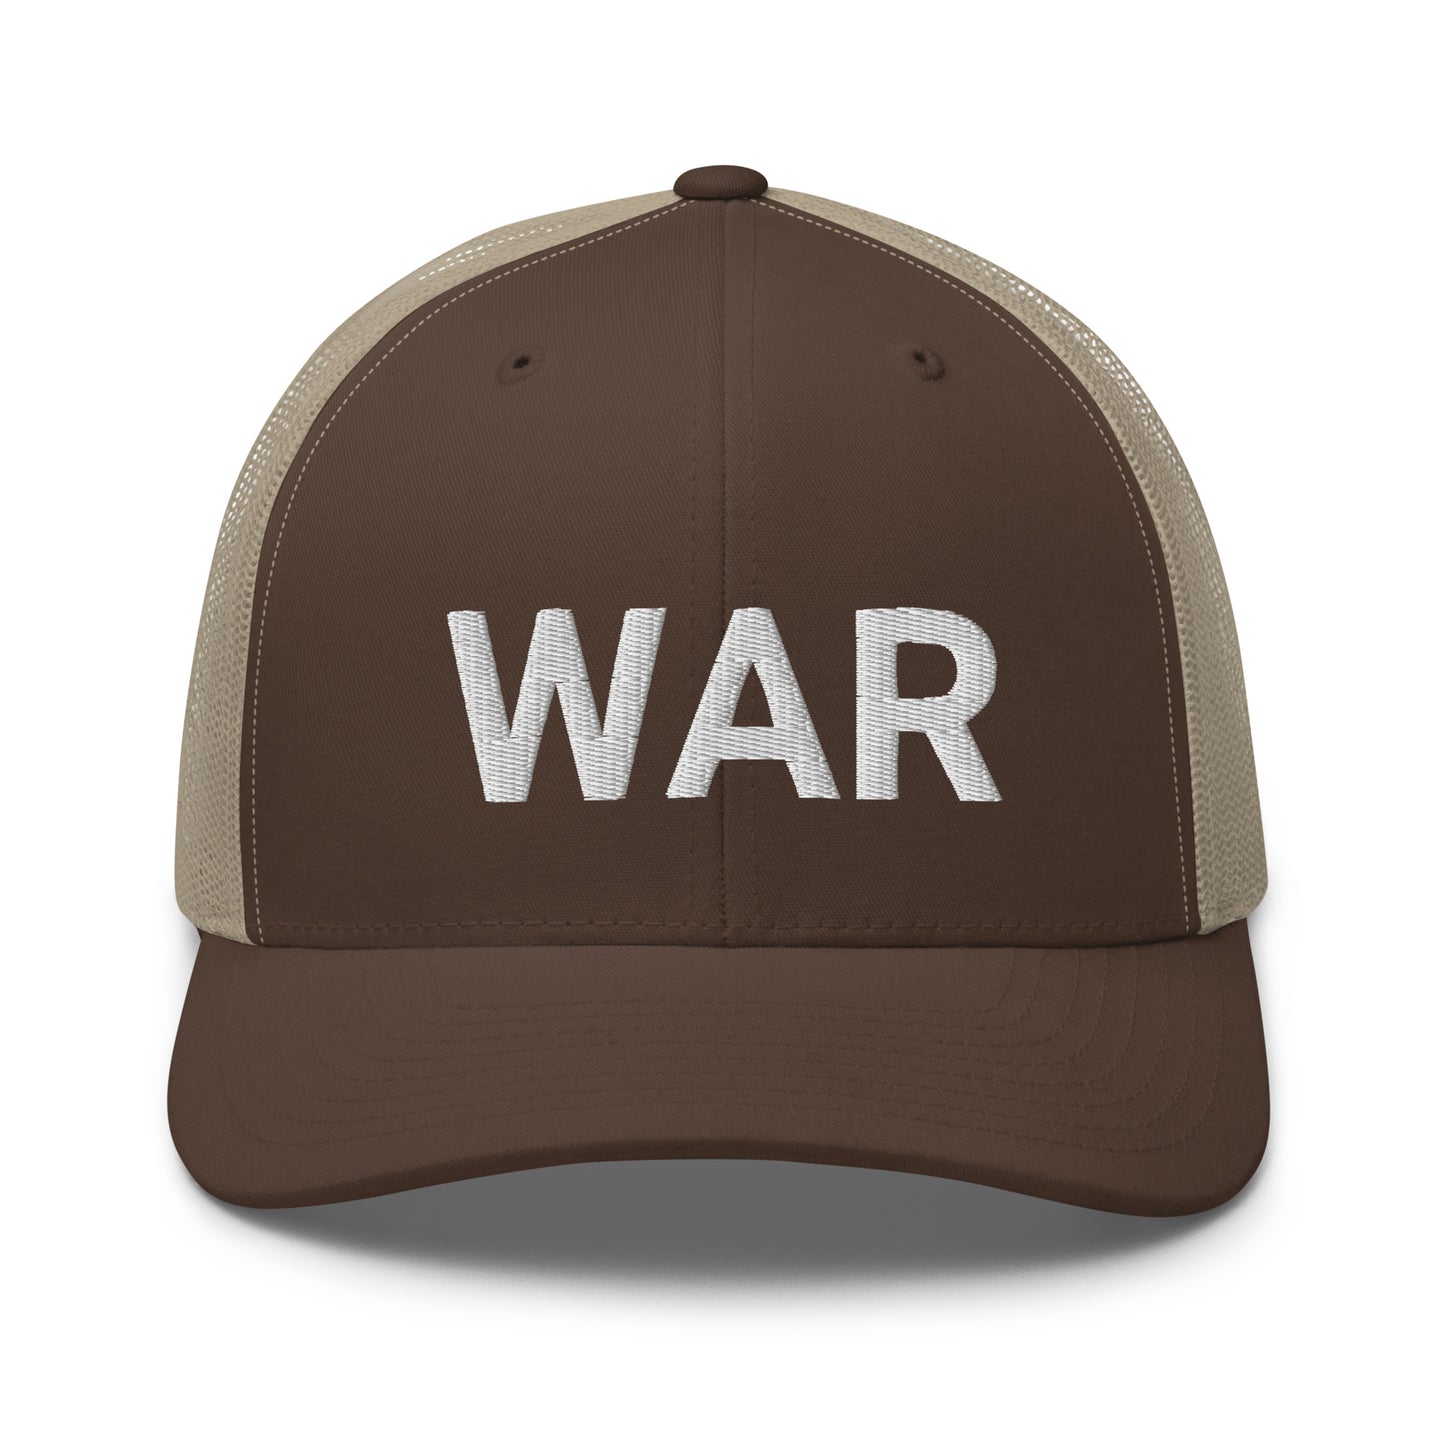 Marvin Hagler War hat / Dustin Poirier War Hat / War Trucker Cap